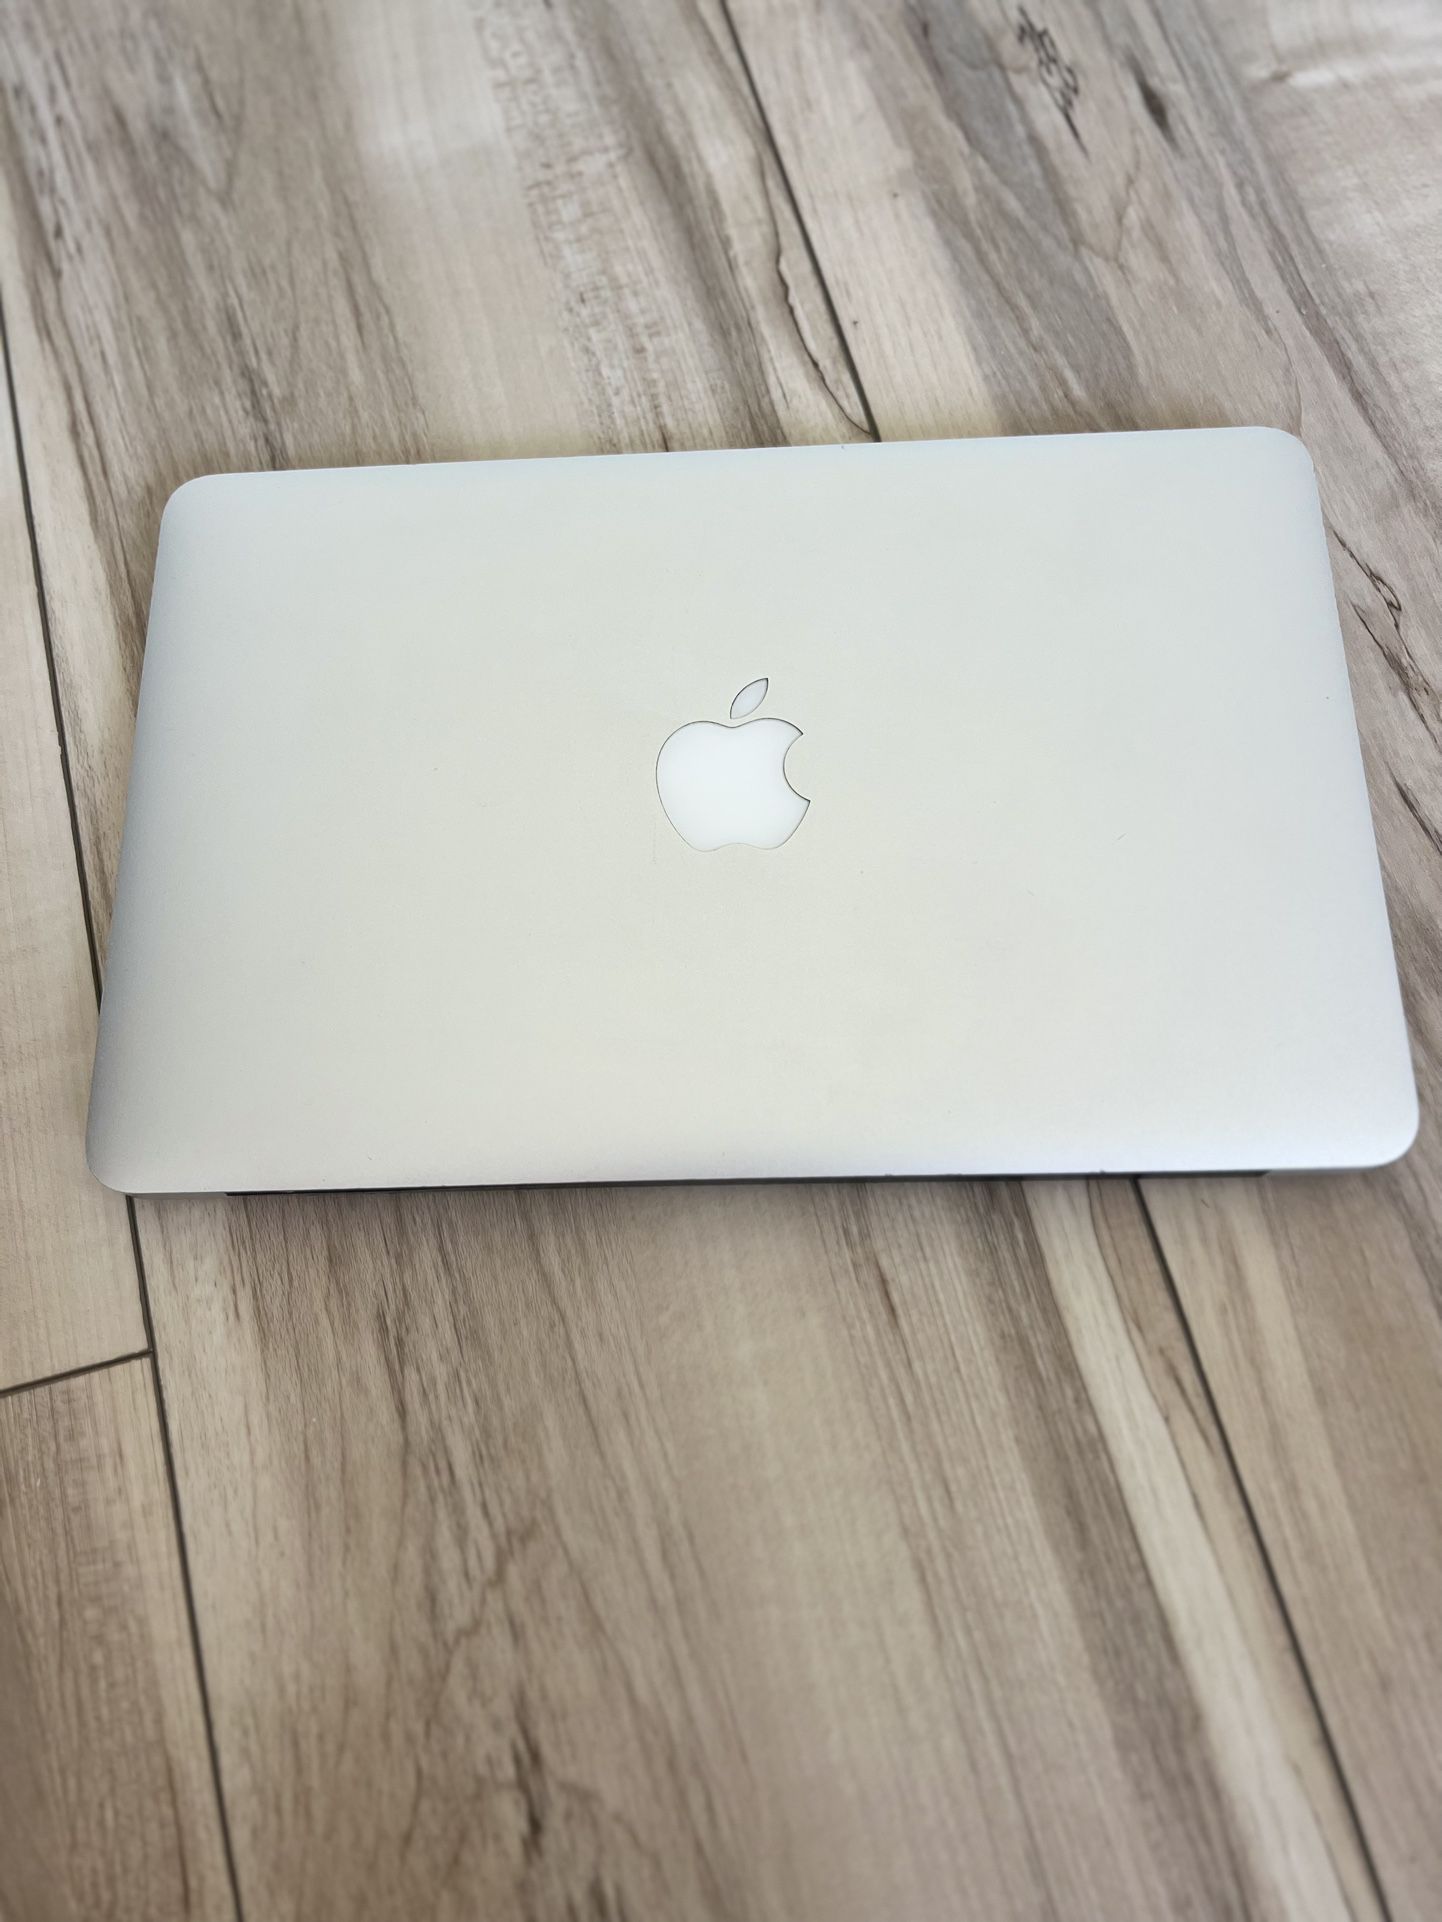 MacBook Air Labtop Computer